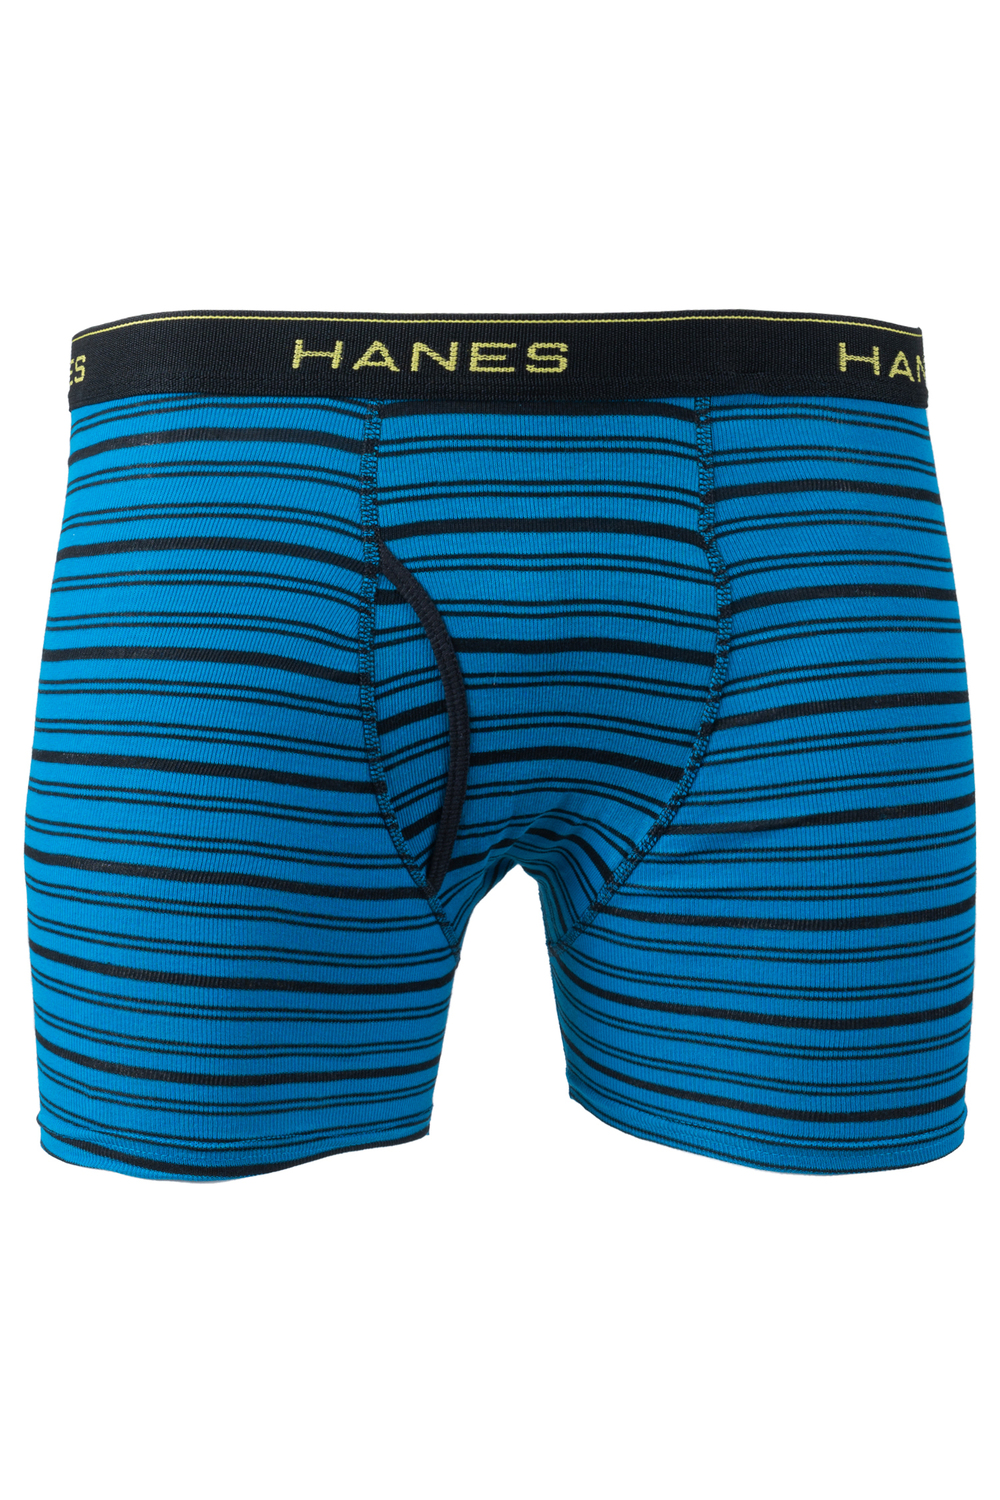 Hanes Men TAGLESS Ultimate Fashion Stripe Boxer Briefs with